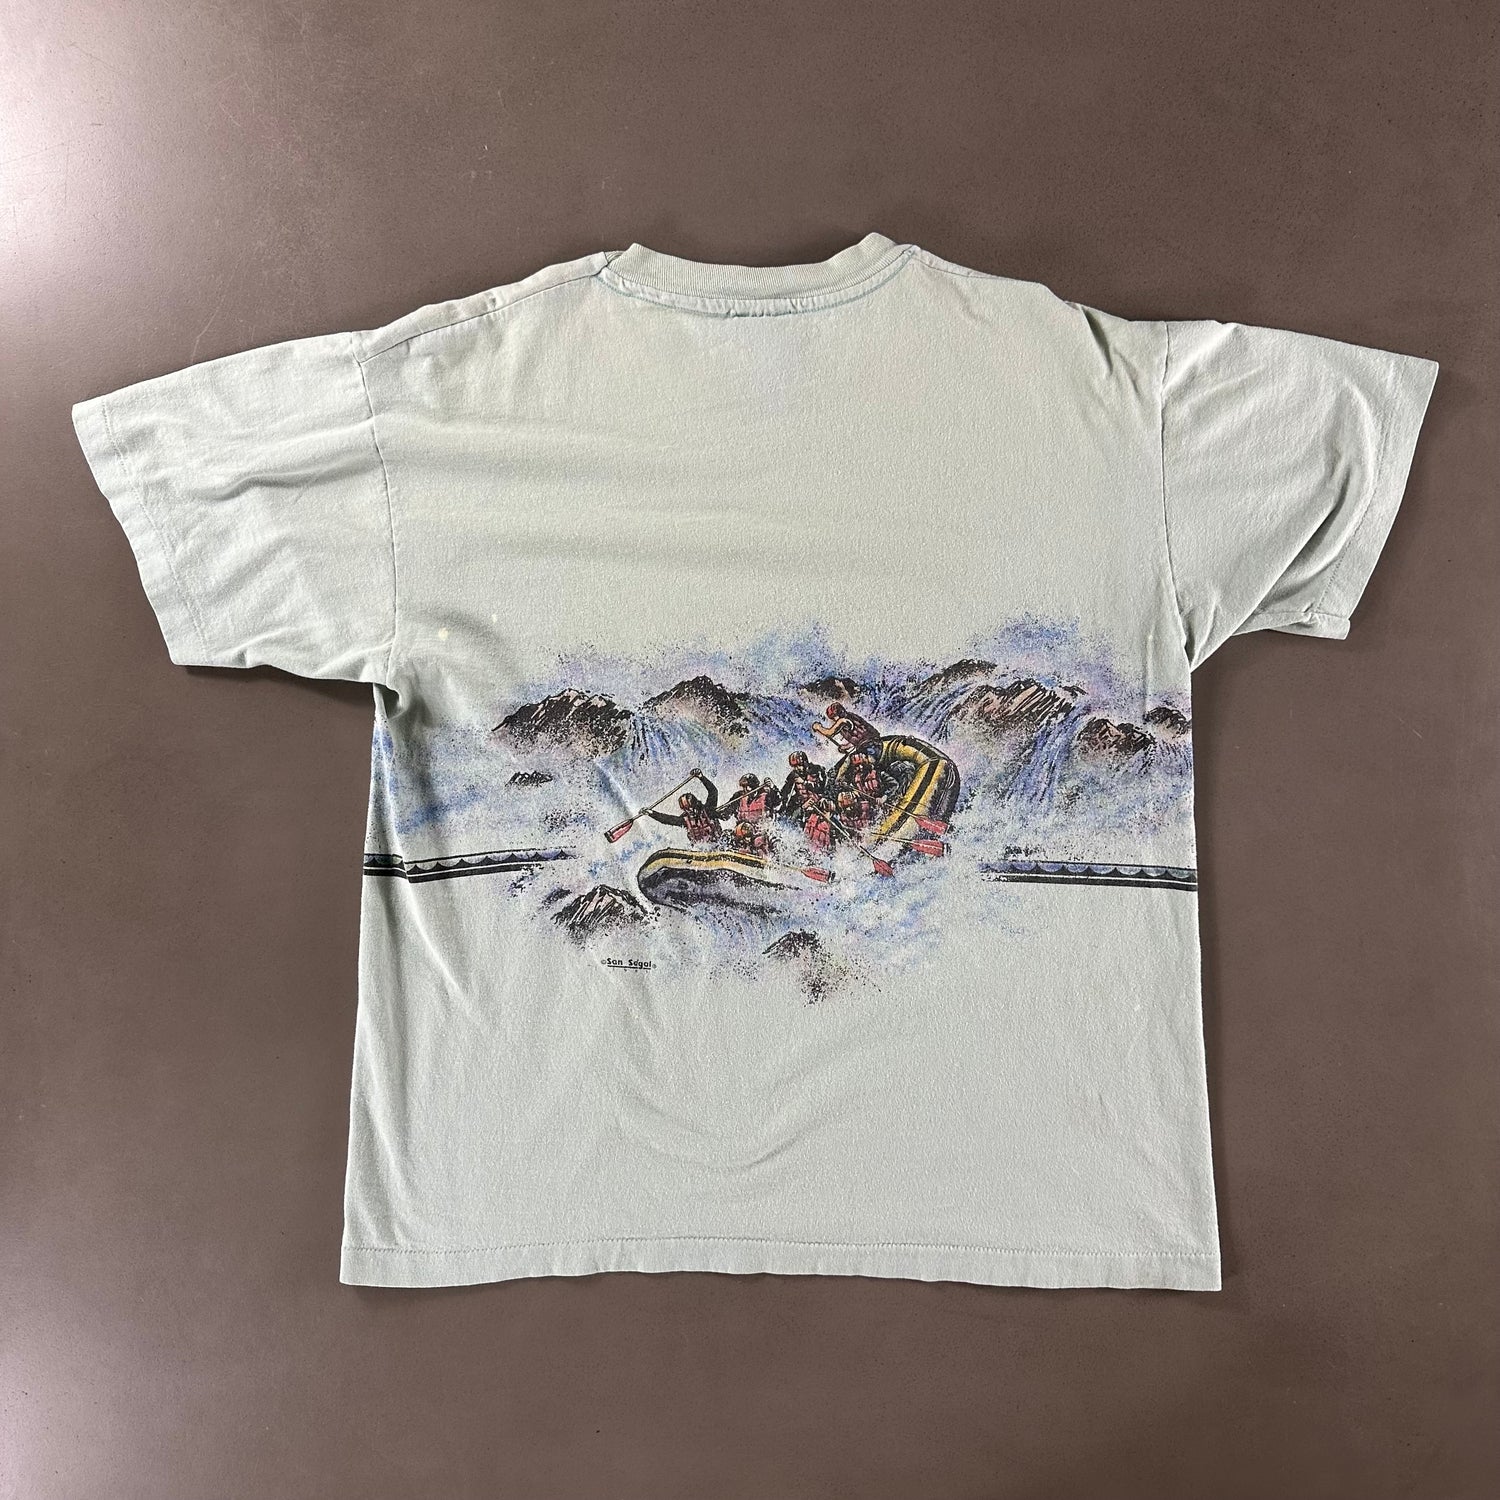 Vintage 1991 White Water T-shirt size Large